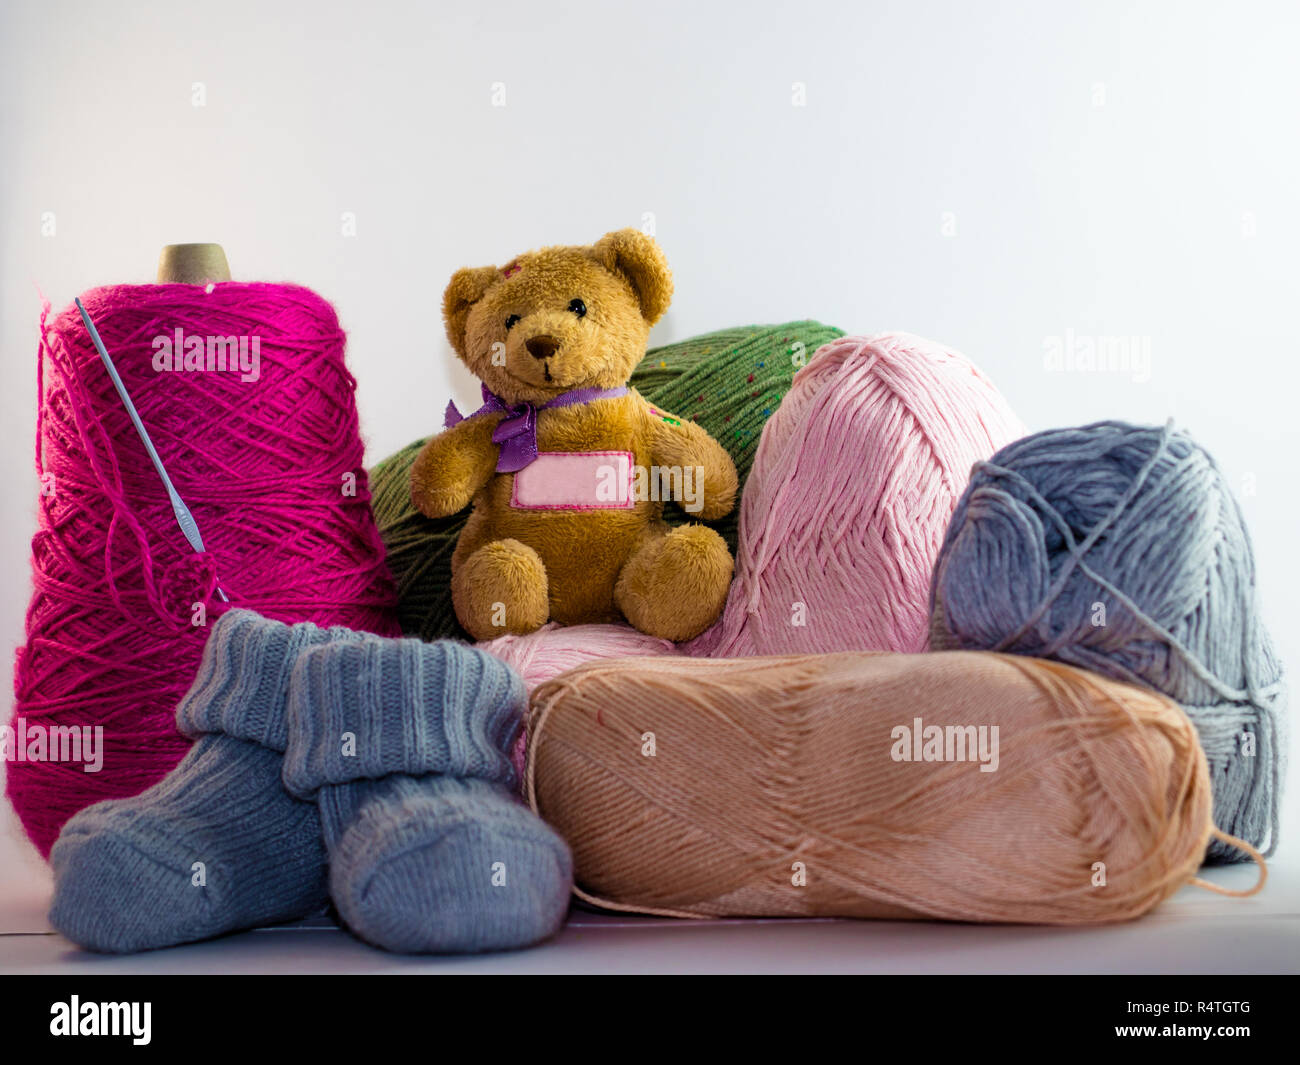 knitting on a white background Stock Photo